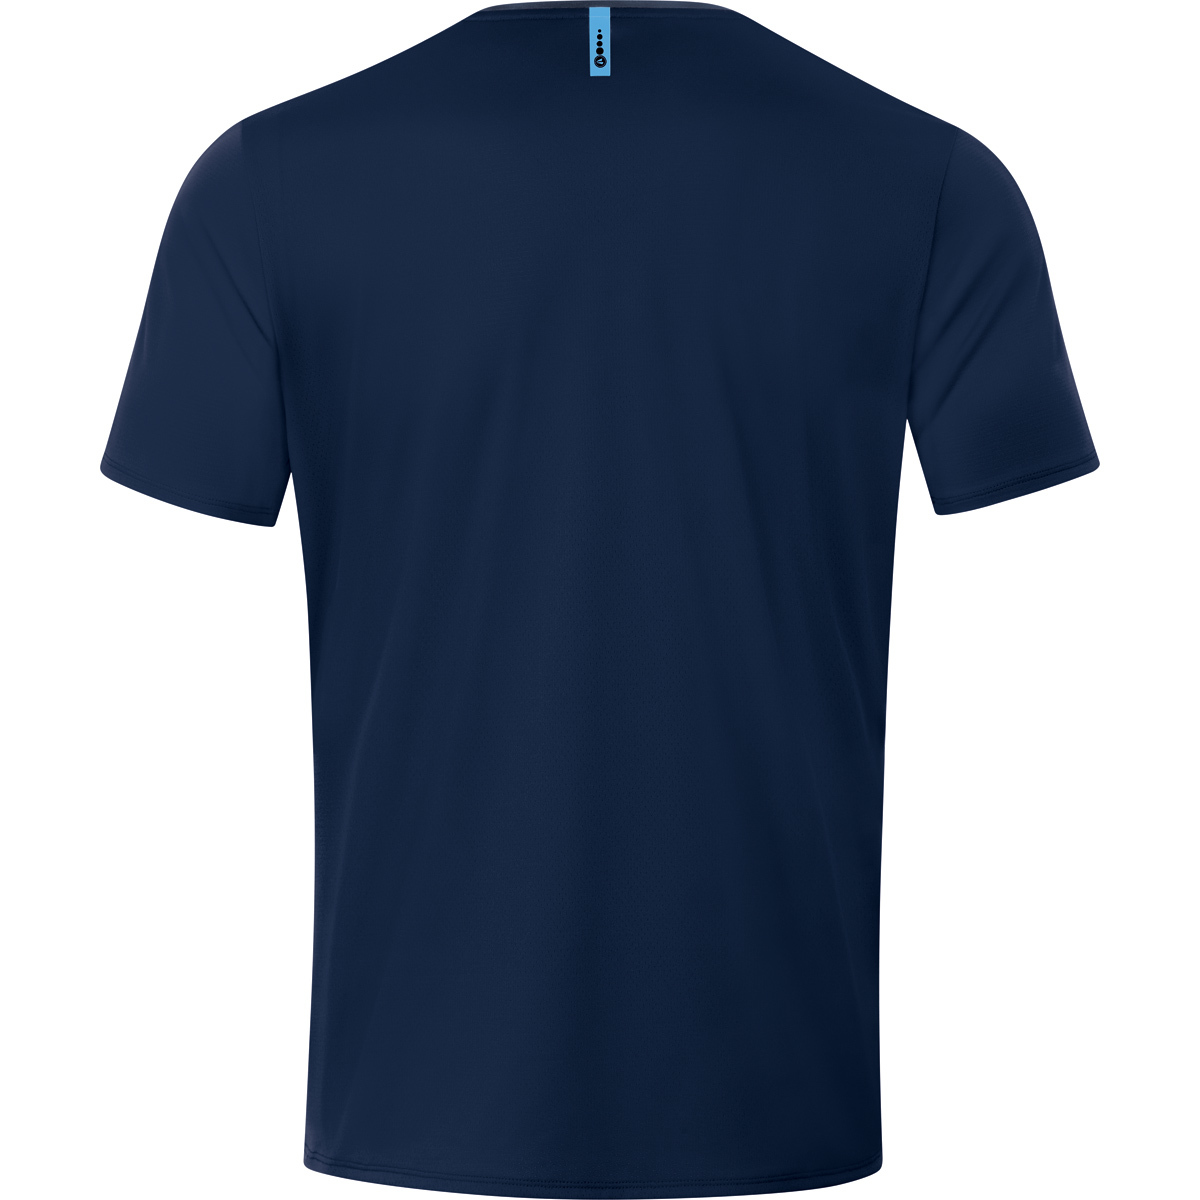 Gr. T-Shirt 2.0 marine/darkblue/skyblue, JAKO 6120 Kinder, Champ 152,